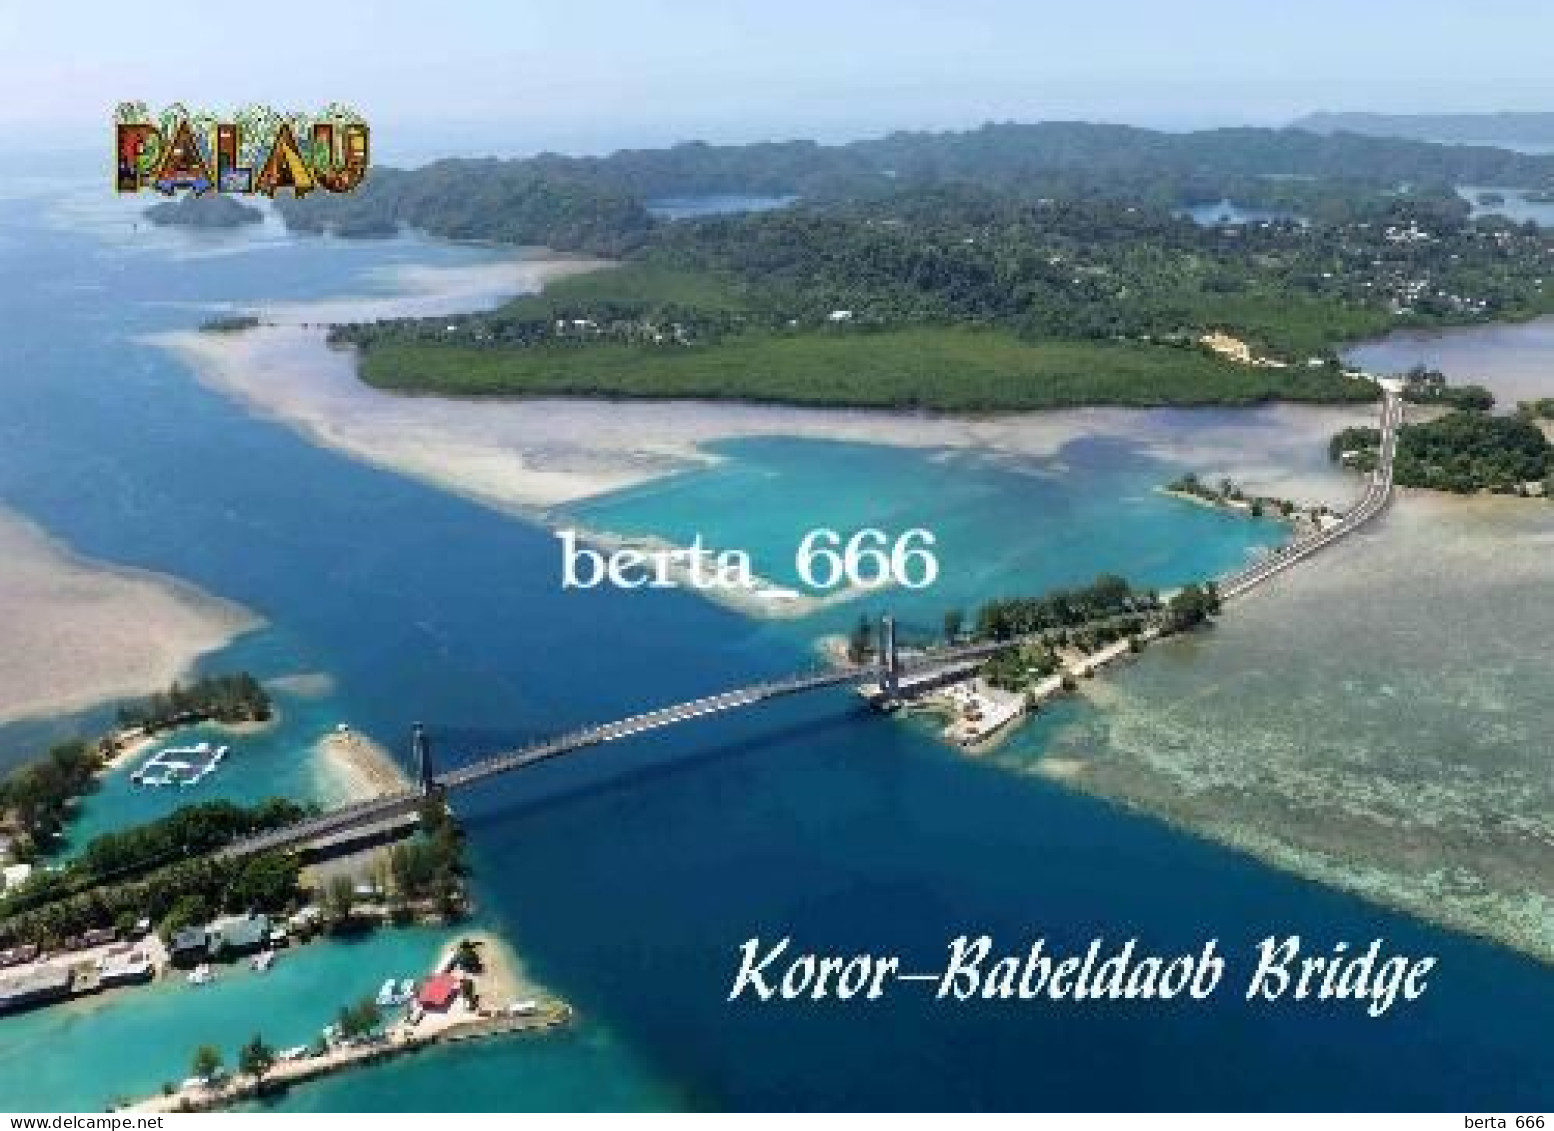 Palau Koror-Babeldaob Bridge New Postcard - Palau